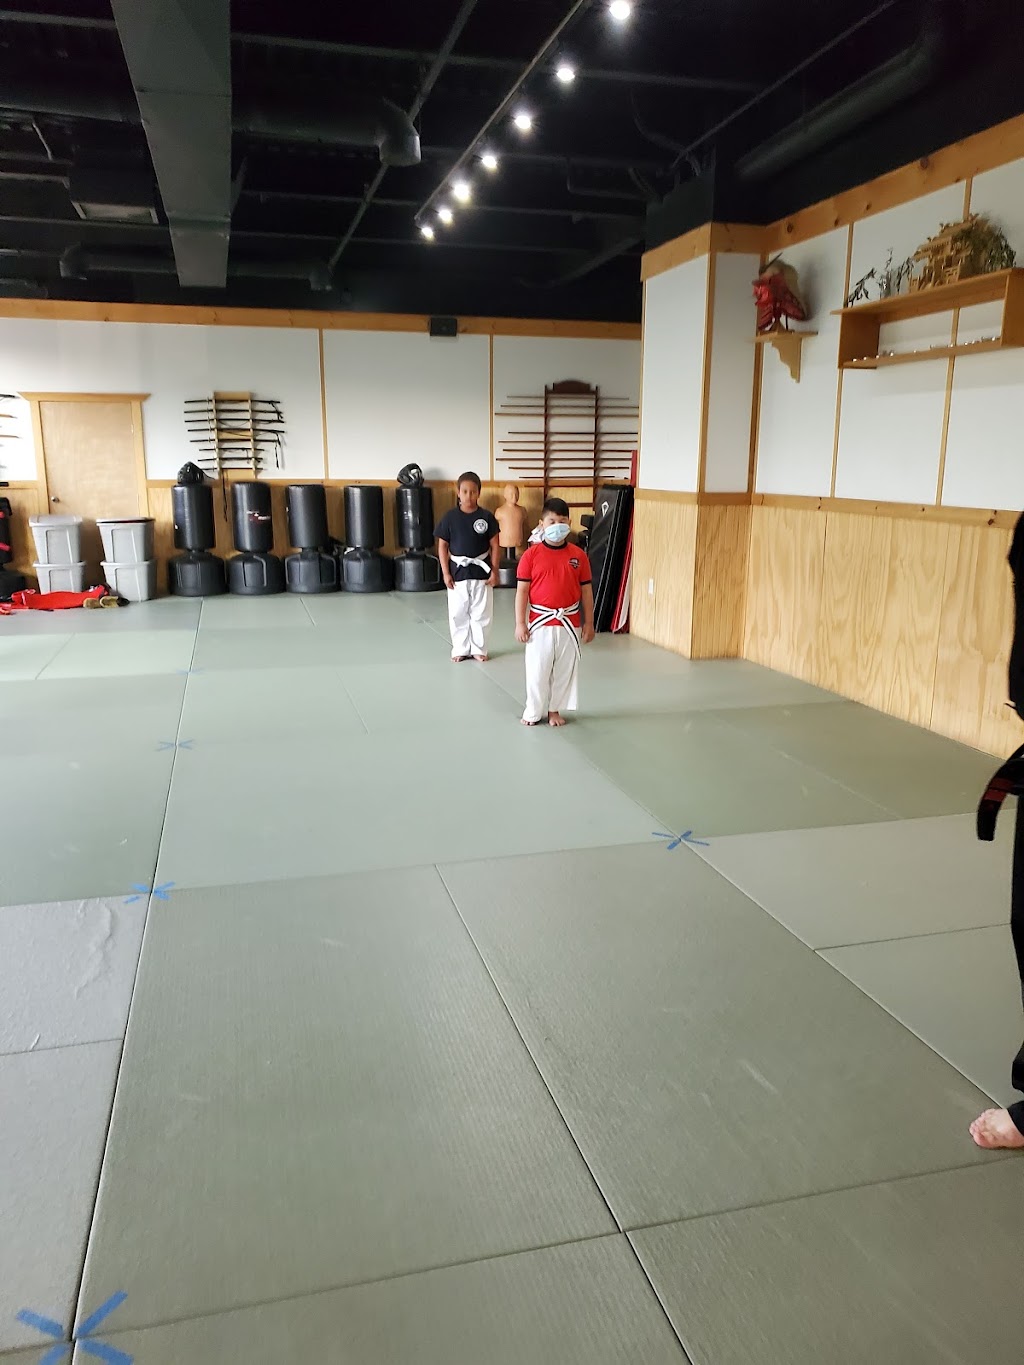 Bushido Karate Dojo | 876 Connetquot Ave #01, Islip Terrace, NY 11752 | Phone: (631) 277-3656